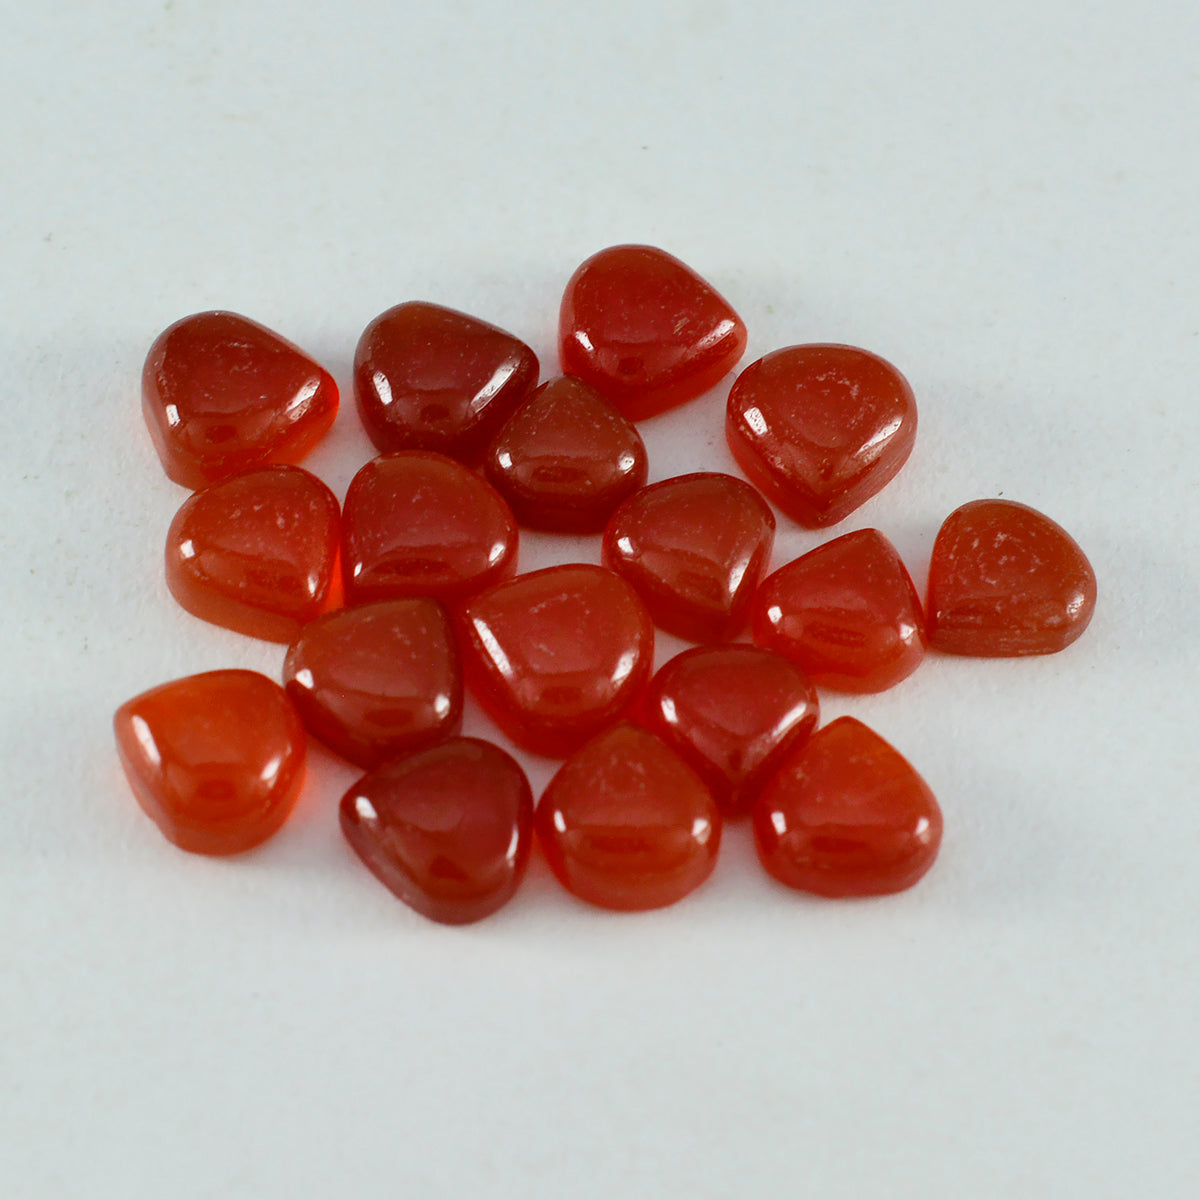 riyogems 1st röd onyx cabochon 6x6 mm hjärtform attraktiv kvalitetspärla